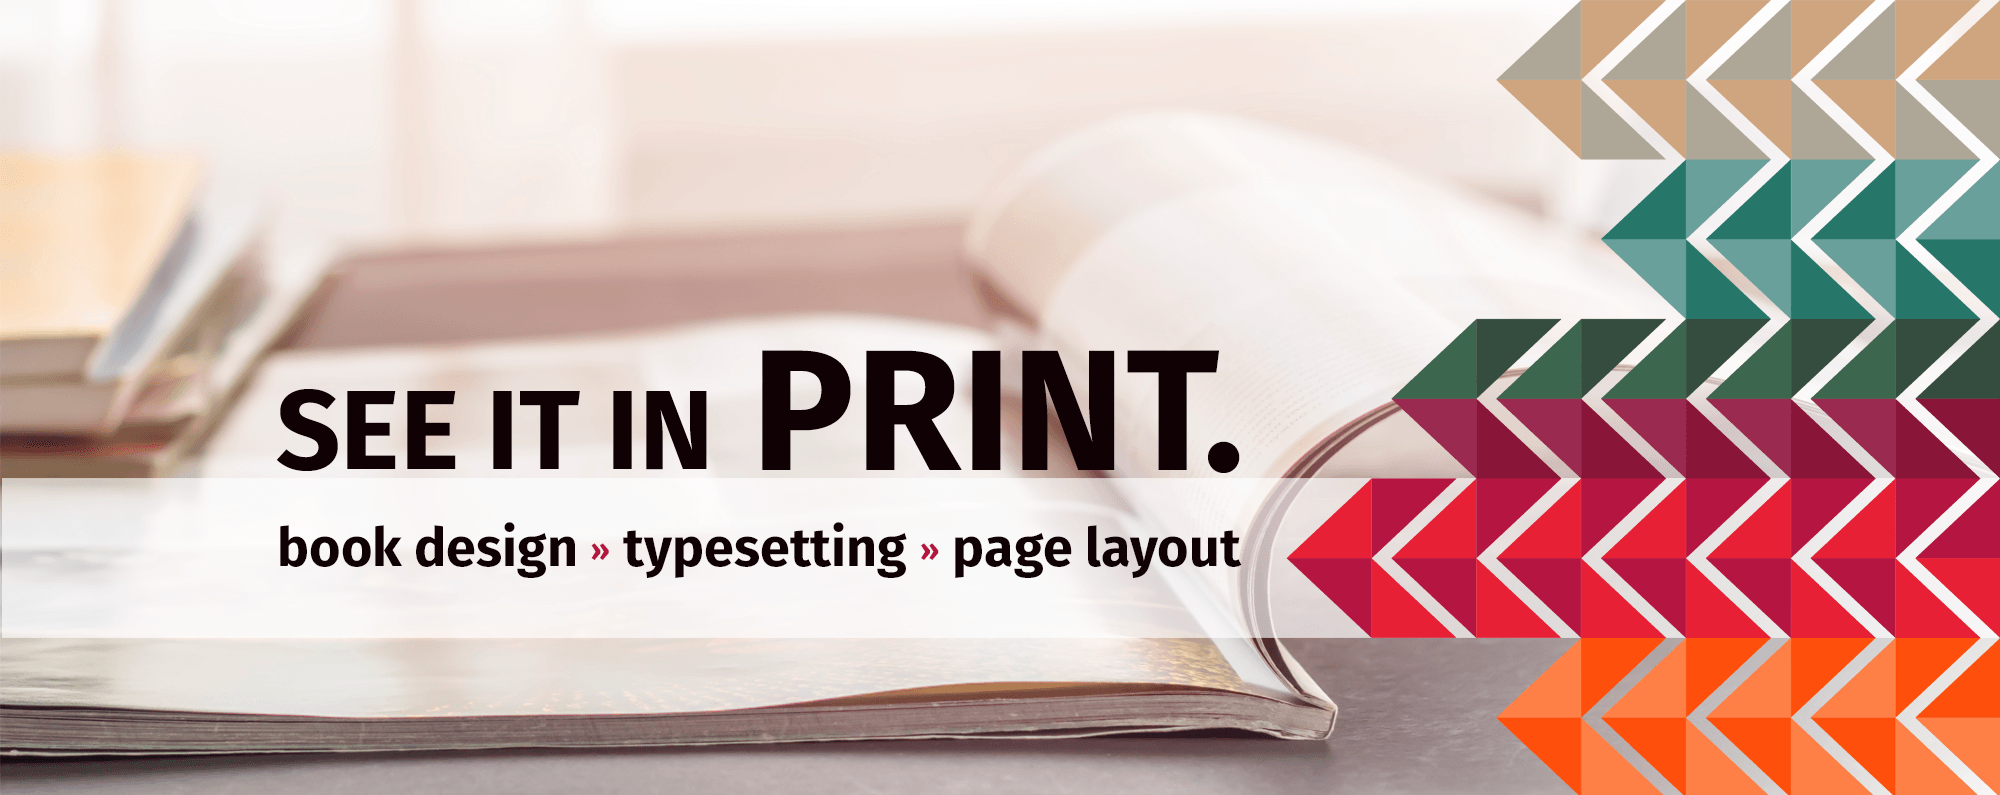 Print Design, Page Layout, Typesetting, Book Design, Magazine Layout